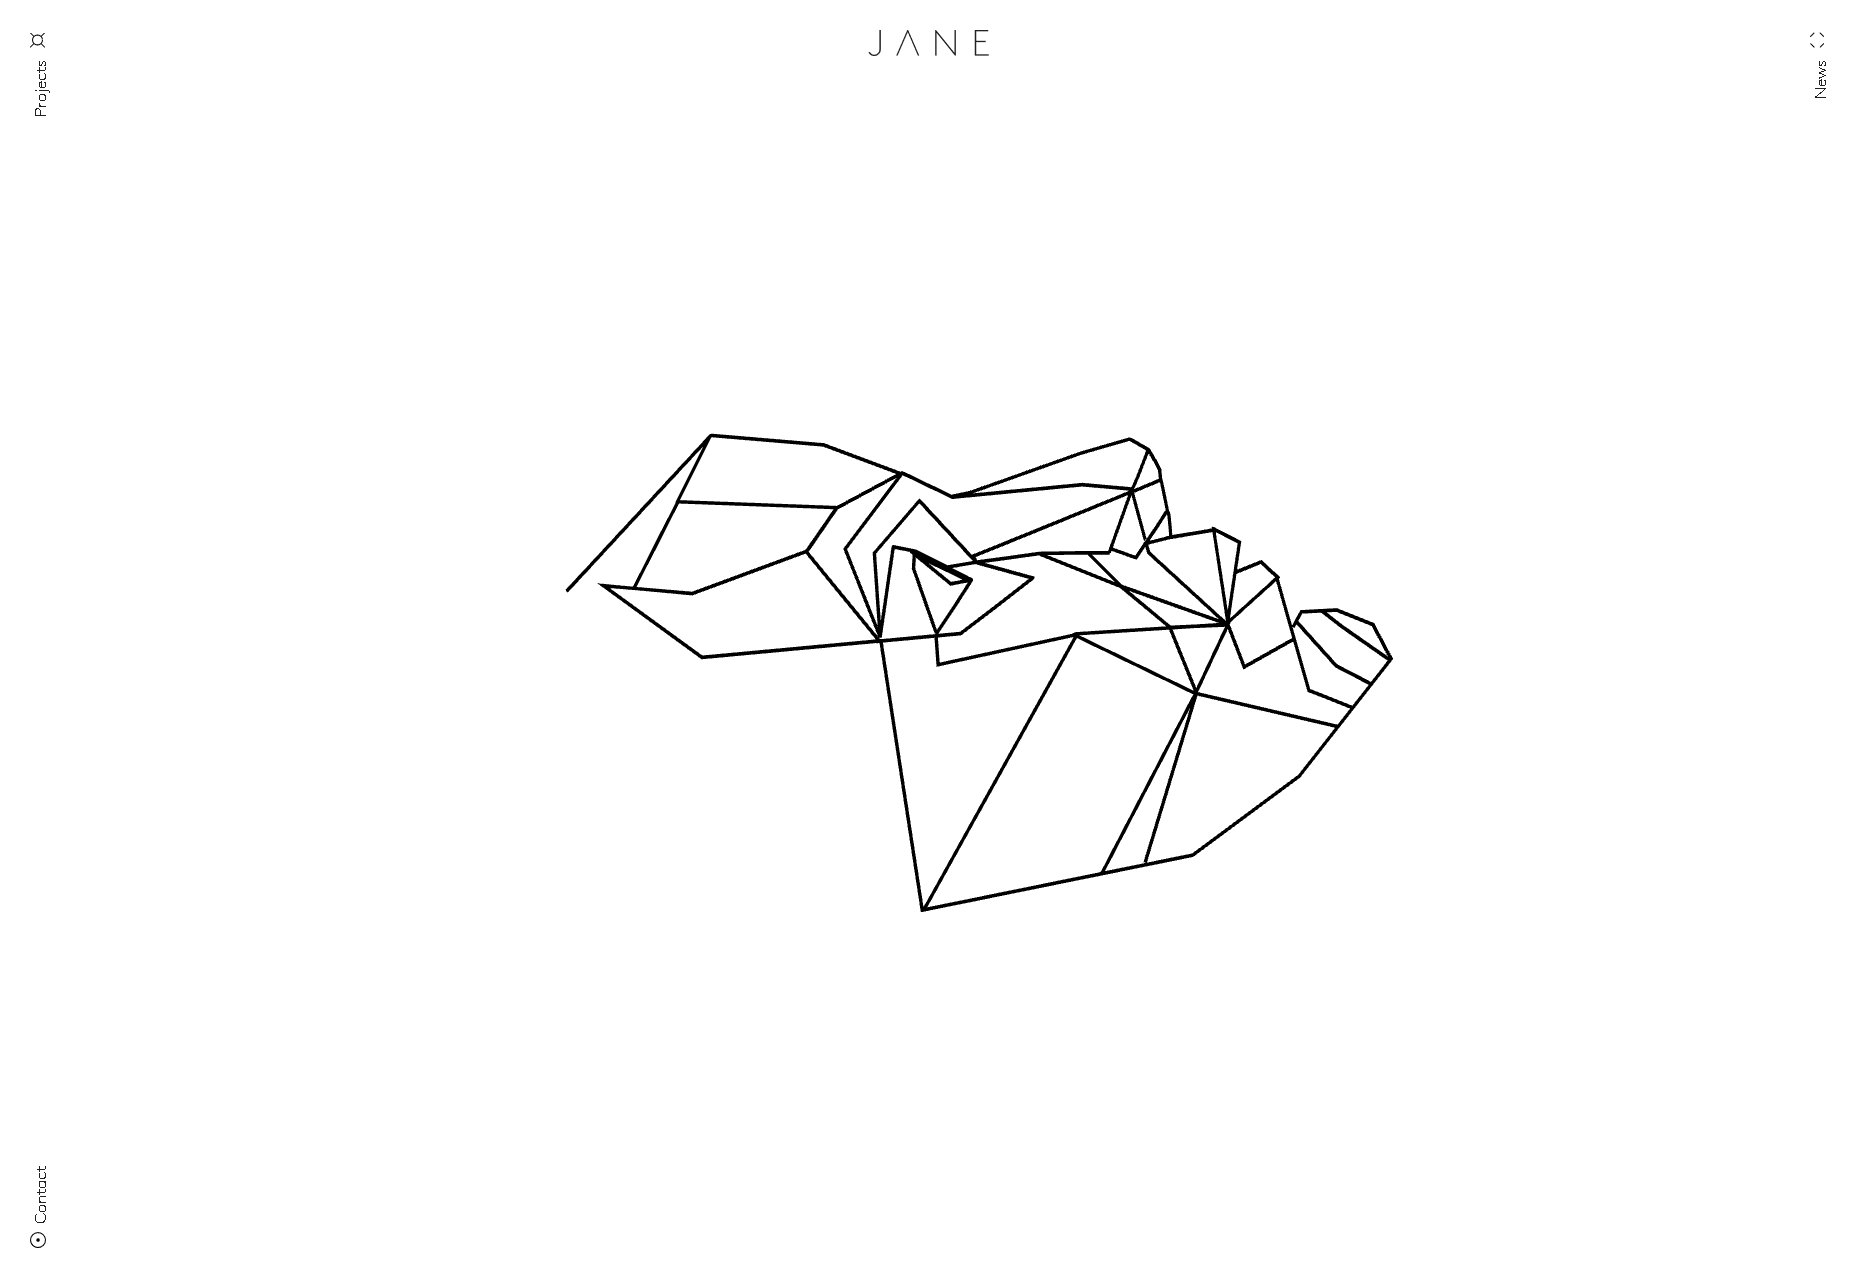 13 - Jane